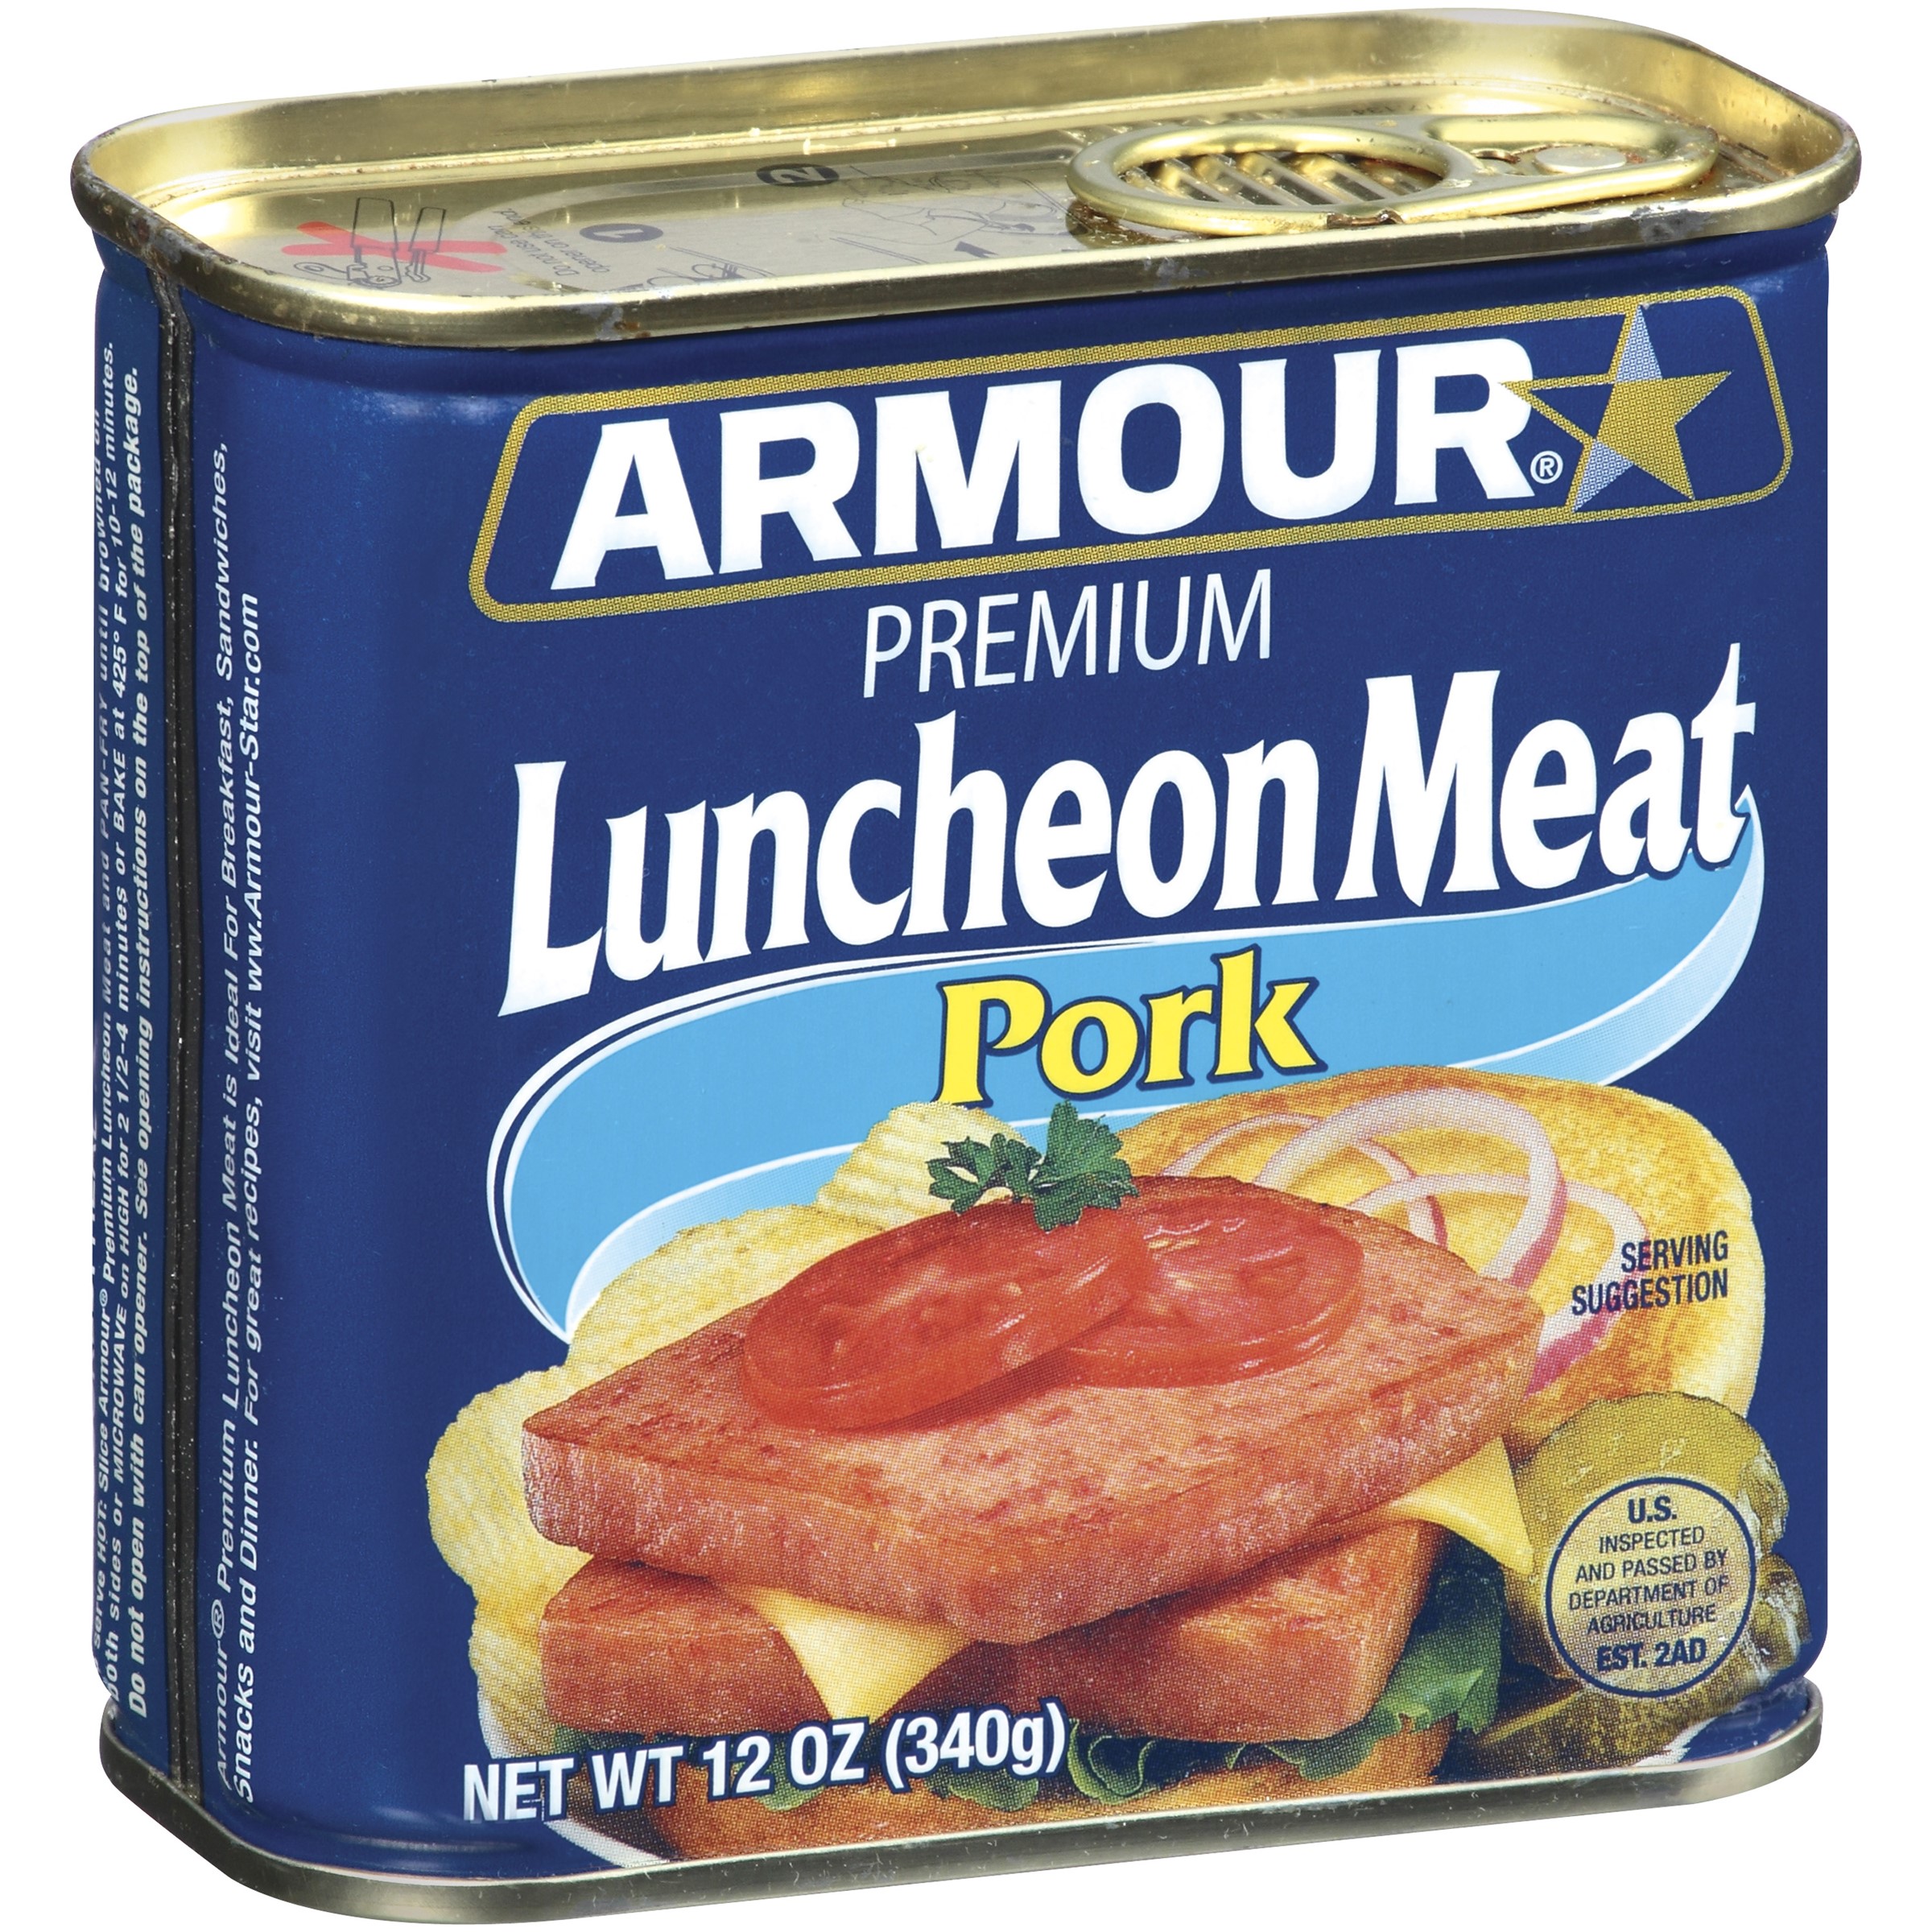 Armour Luncheon Meat Pork 340G